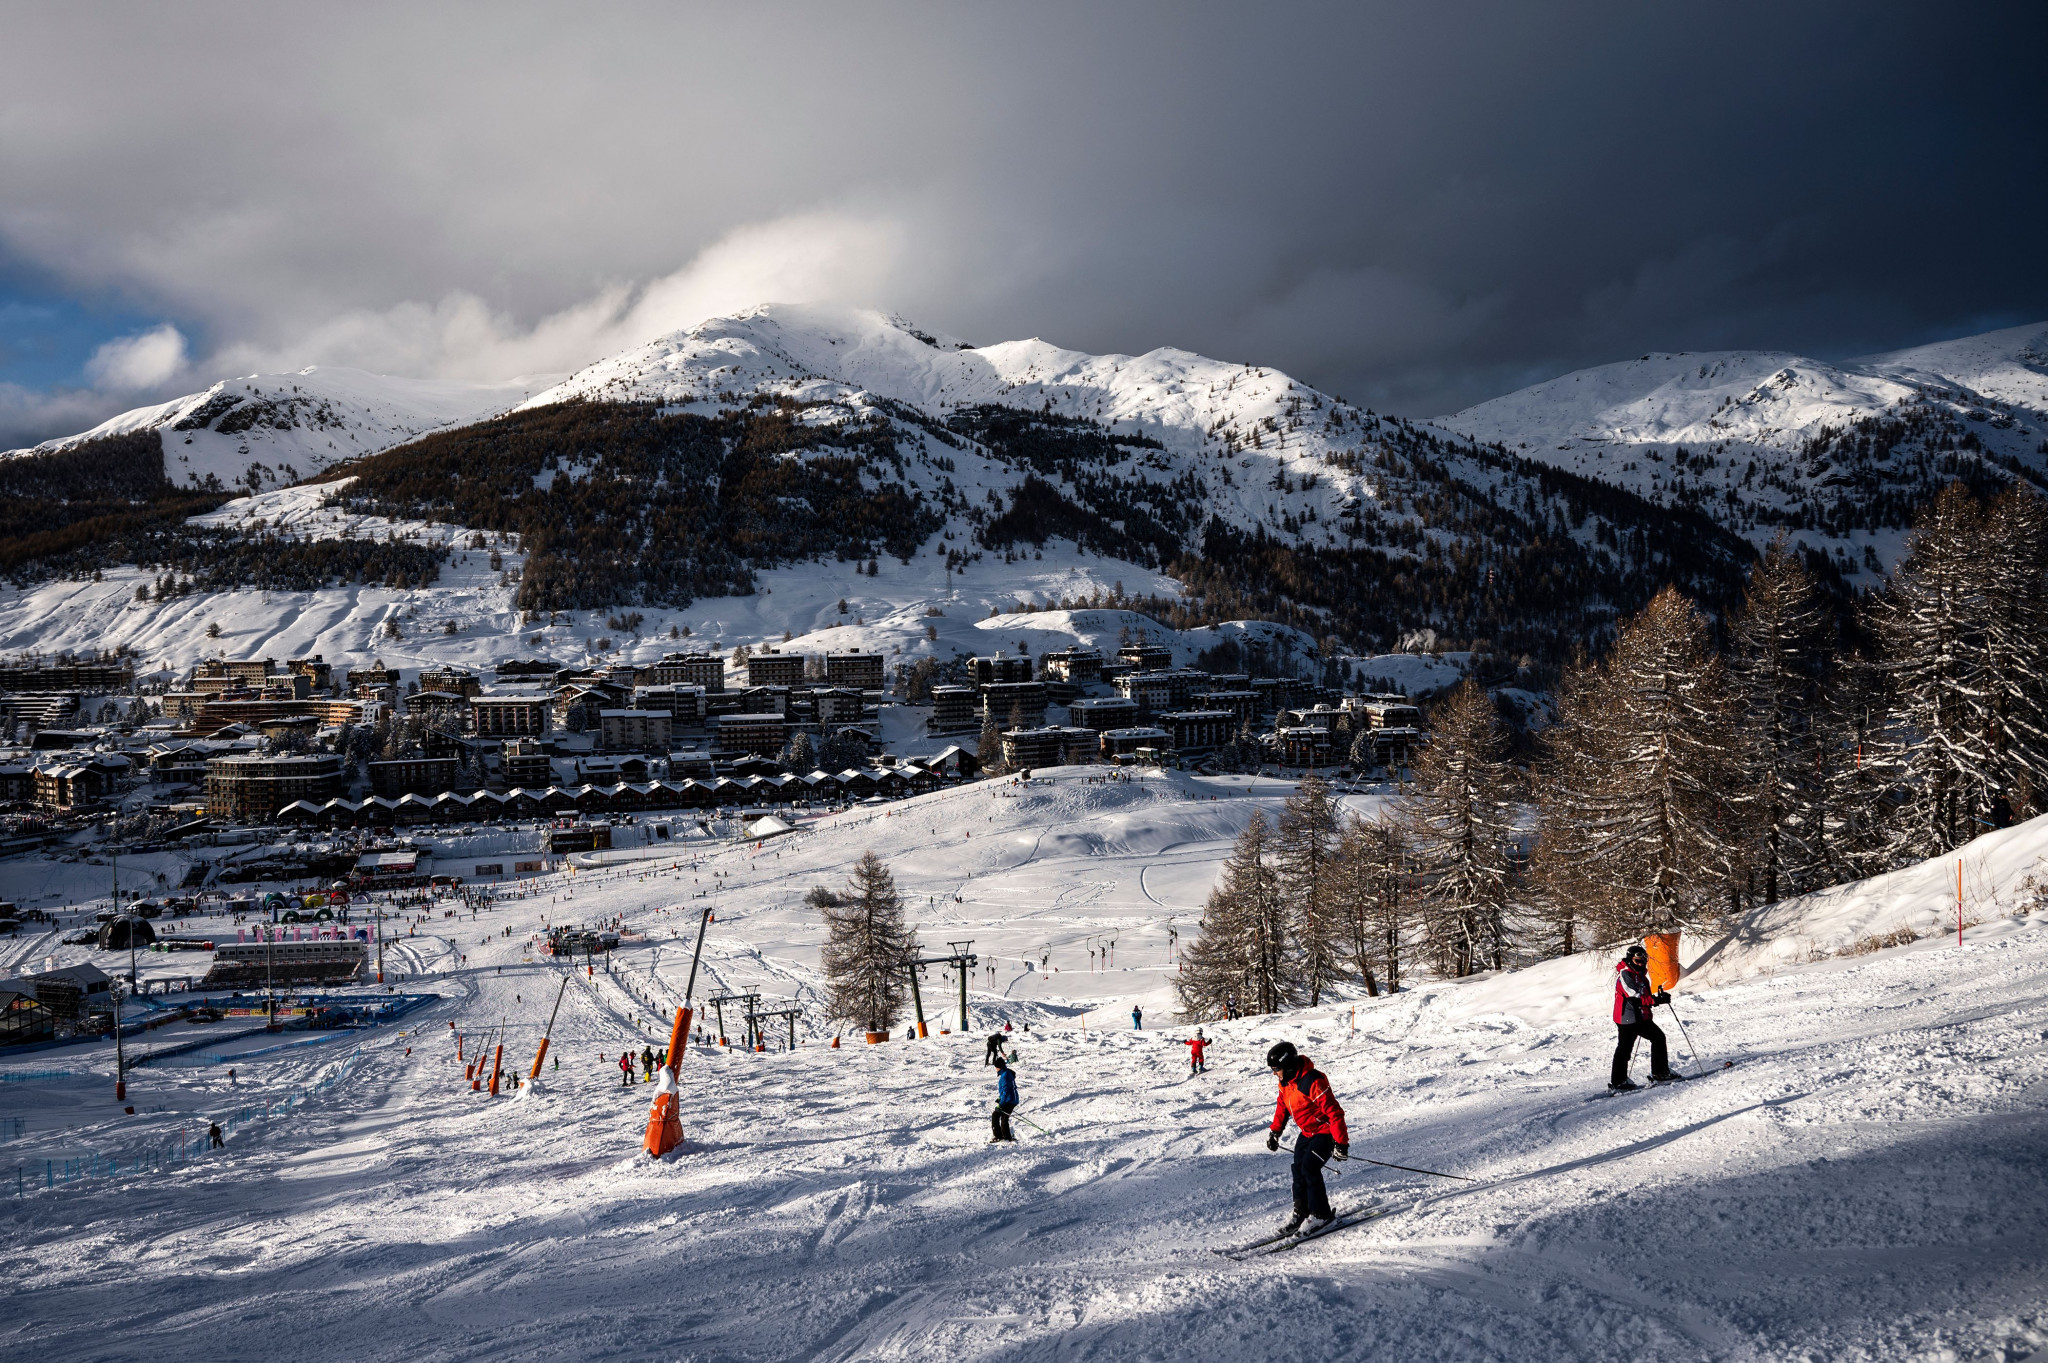 Italy facing snow crisis three years before Milan Cortina 2026 Winter Olympics